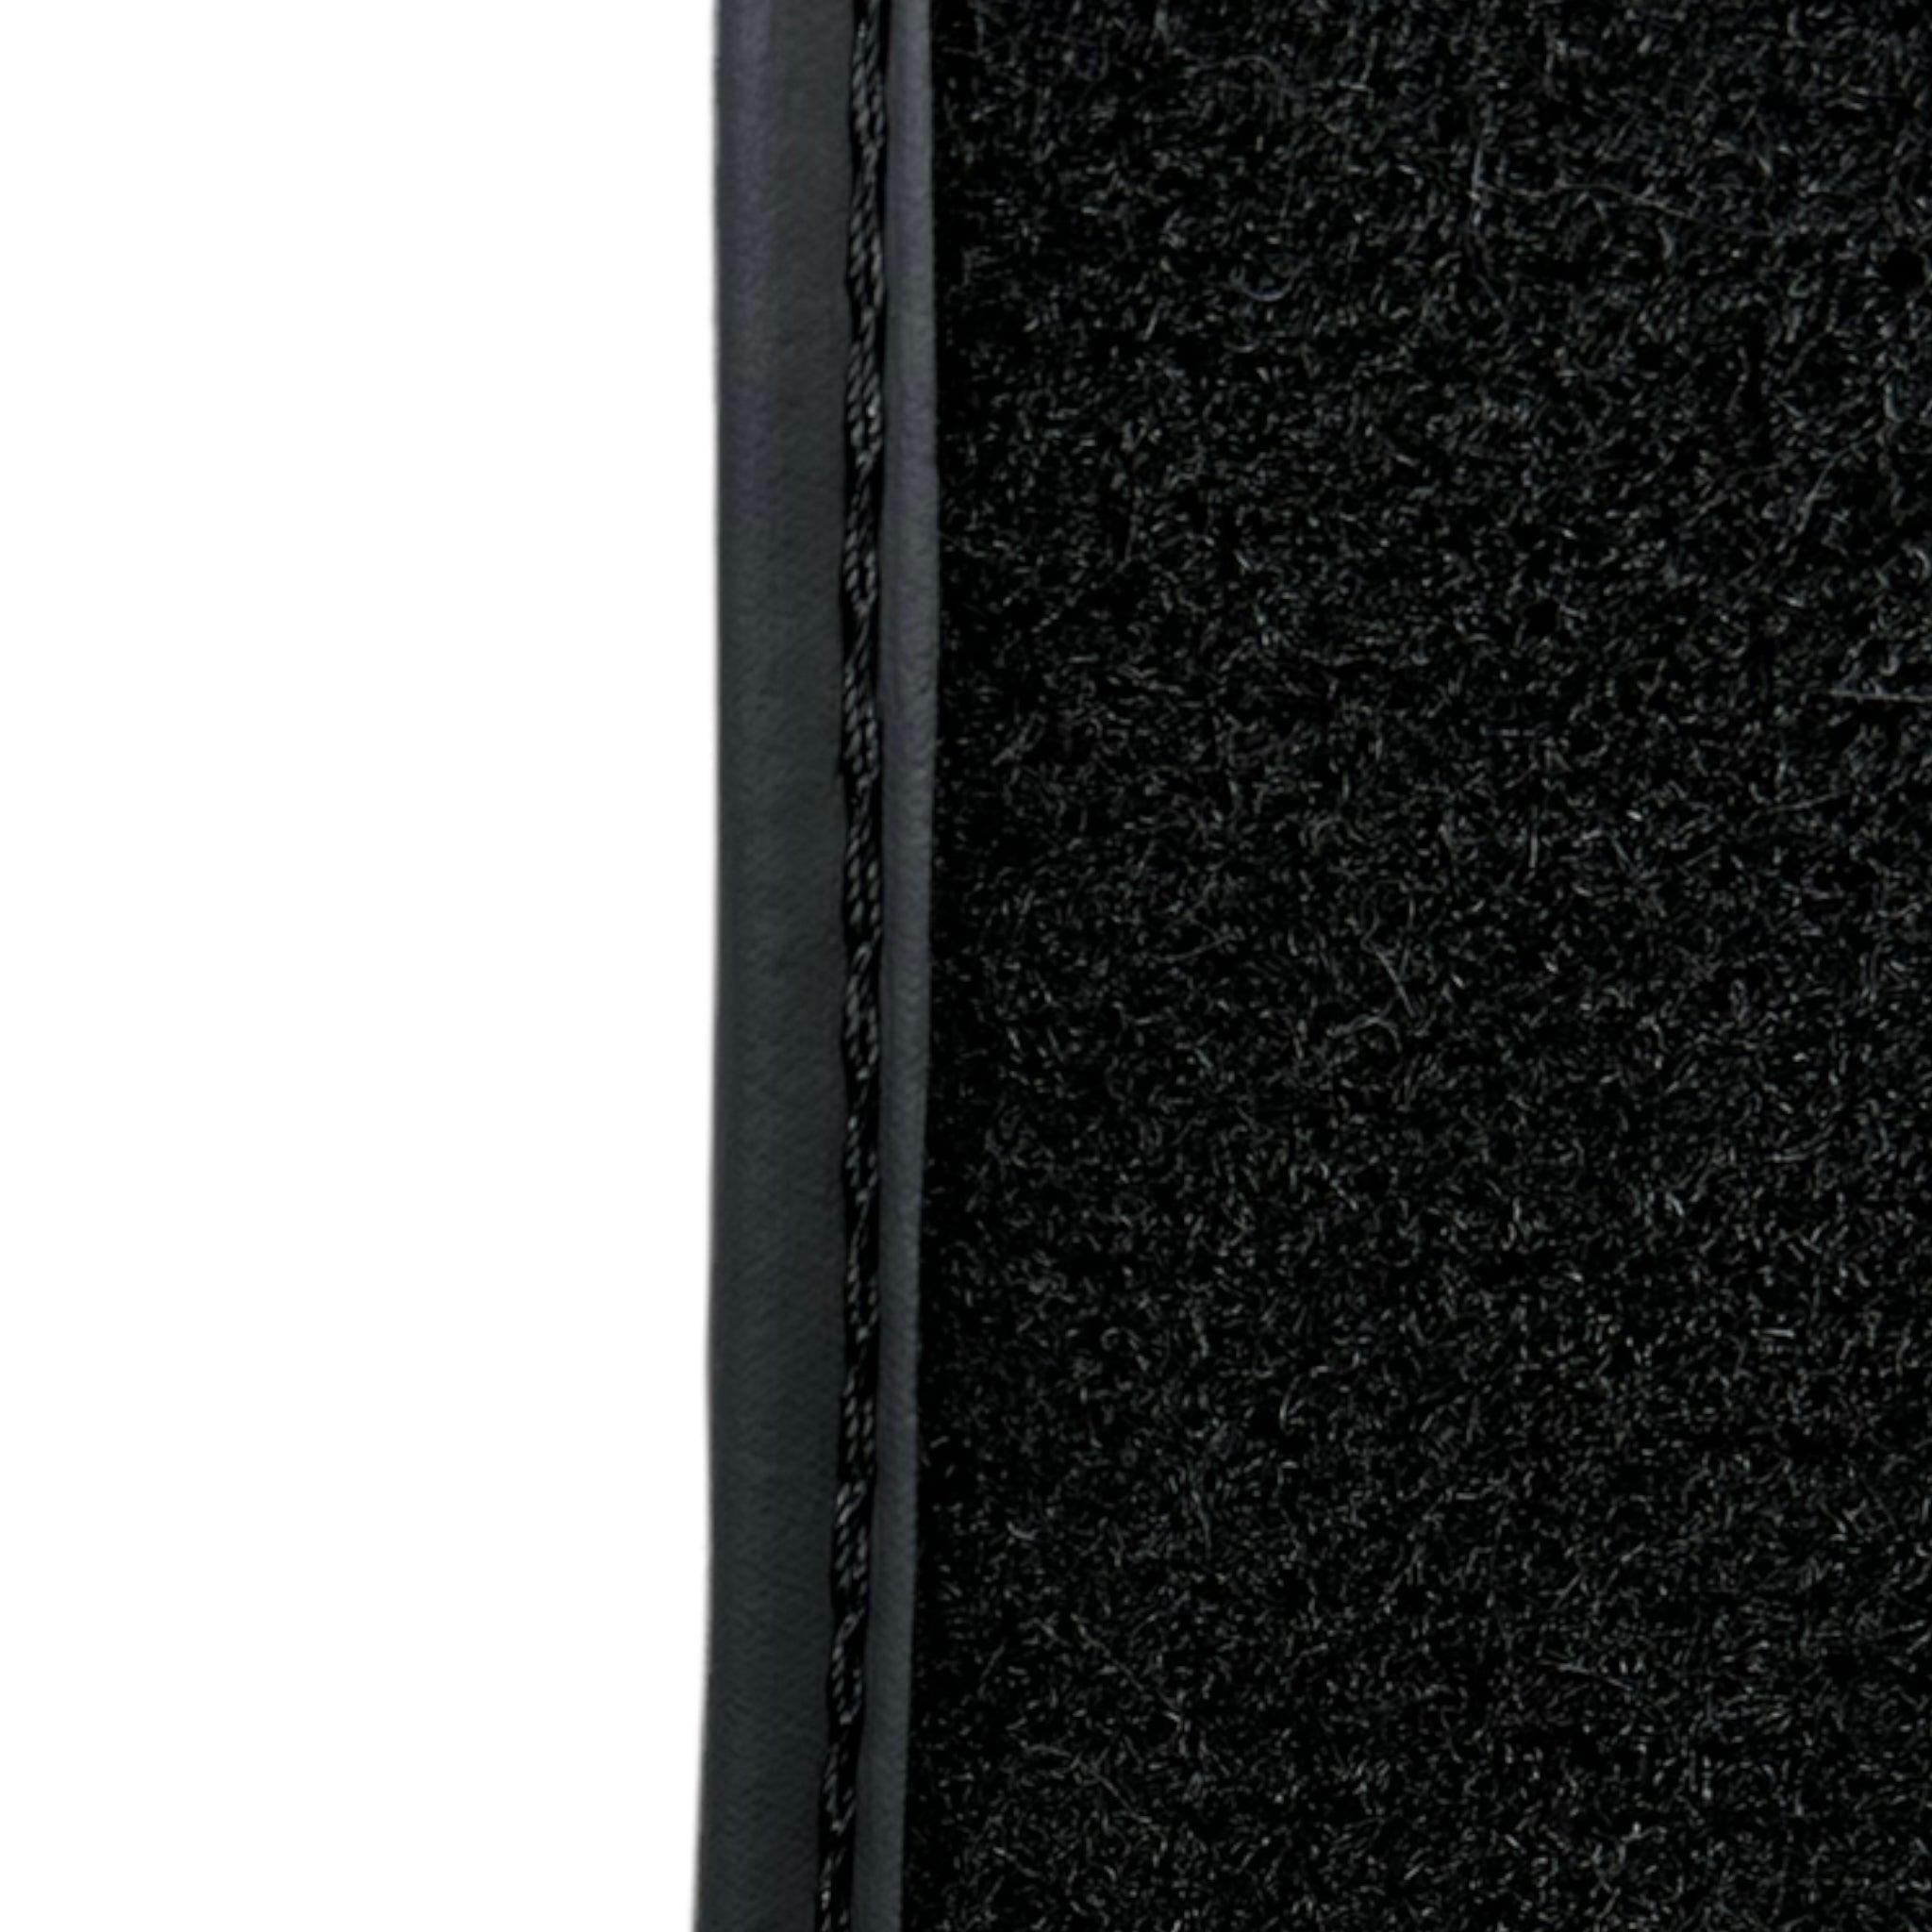 Black Sheepskin Floor Mats For BMW M3 4-door E90 ER56 Design